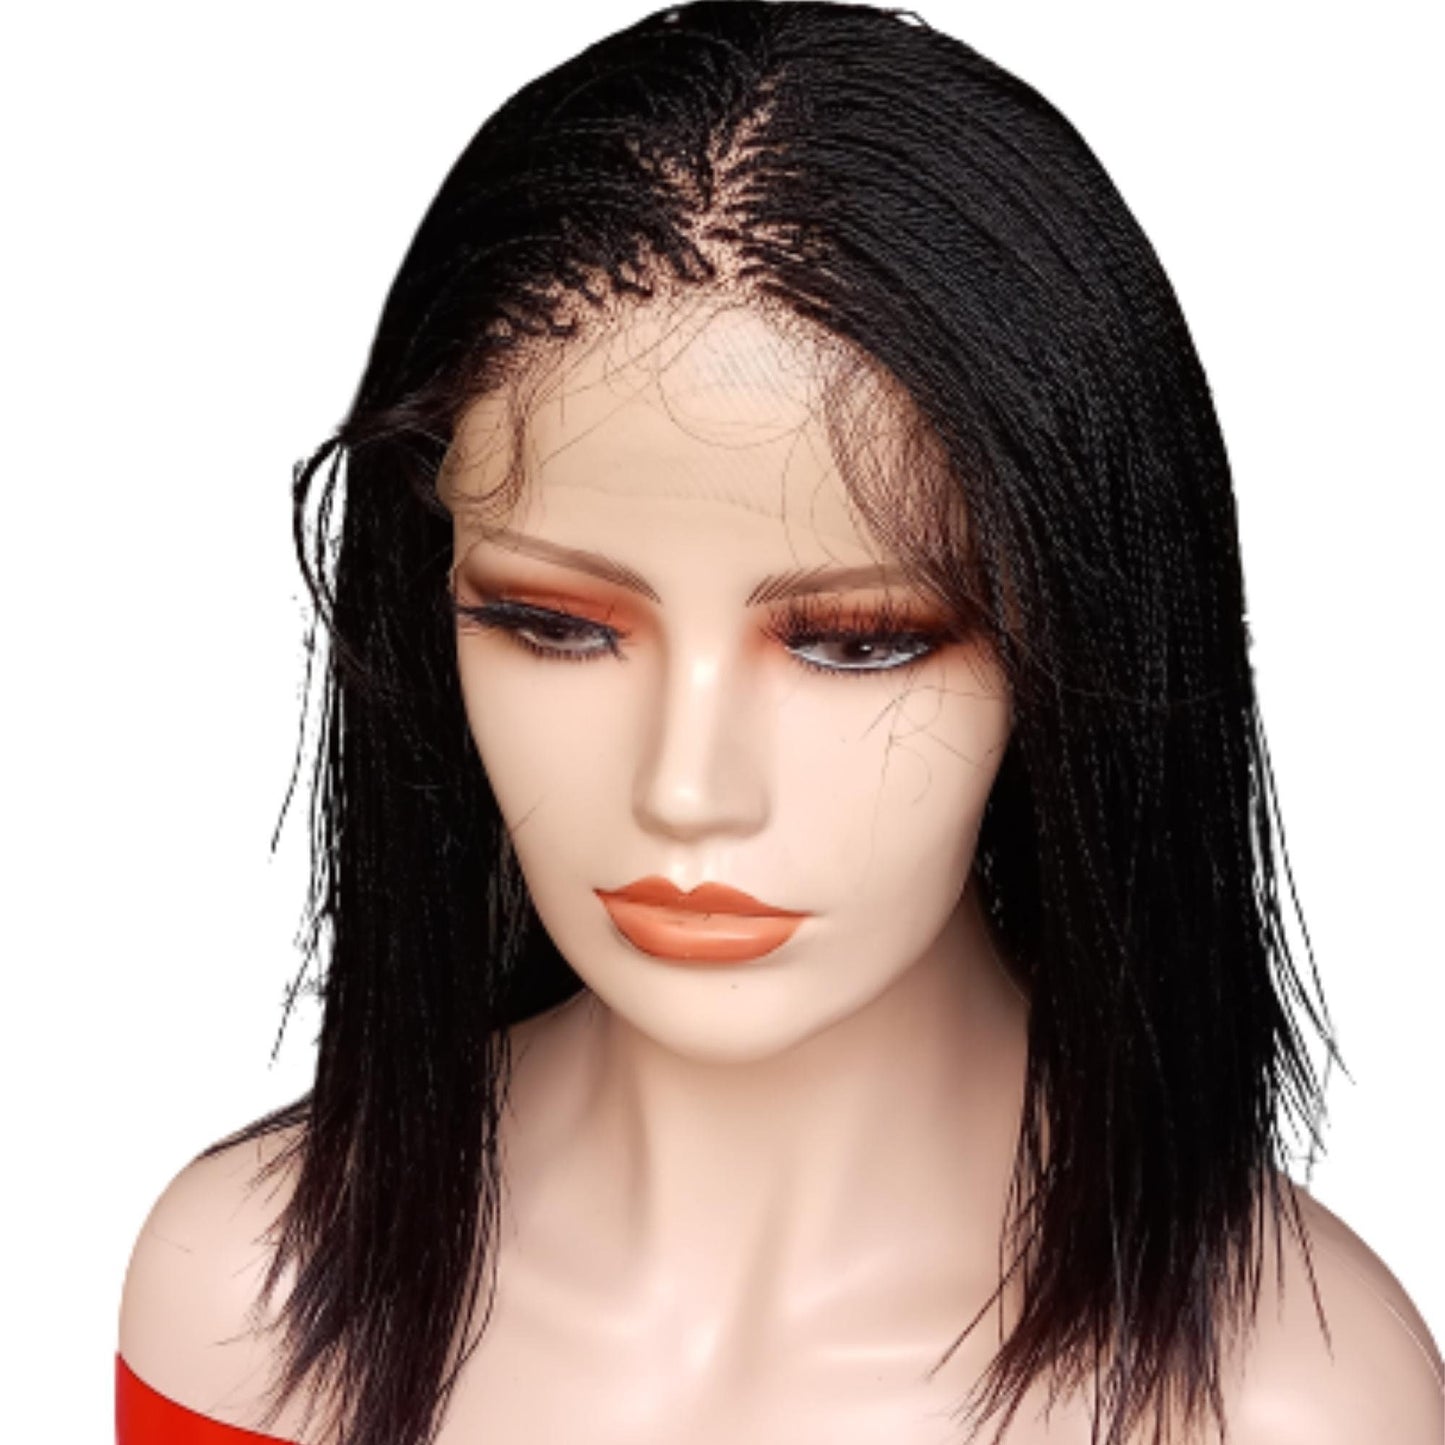 2 in 1 set of braided wig, Micro braid wig, short bob box braid wig, box braided wig, synthetic braid wig, braided wigs for black women